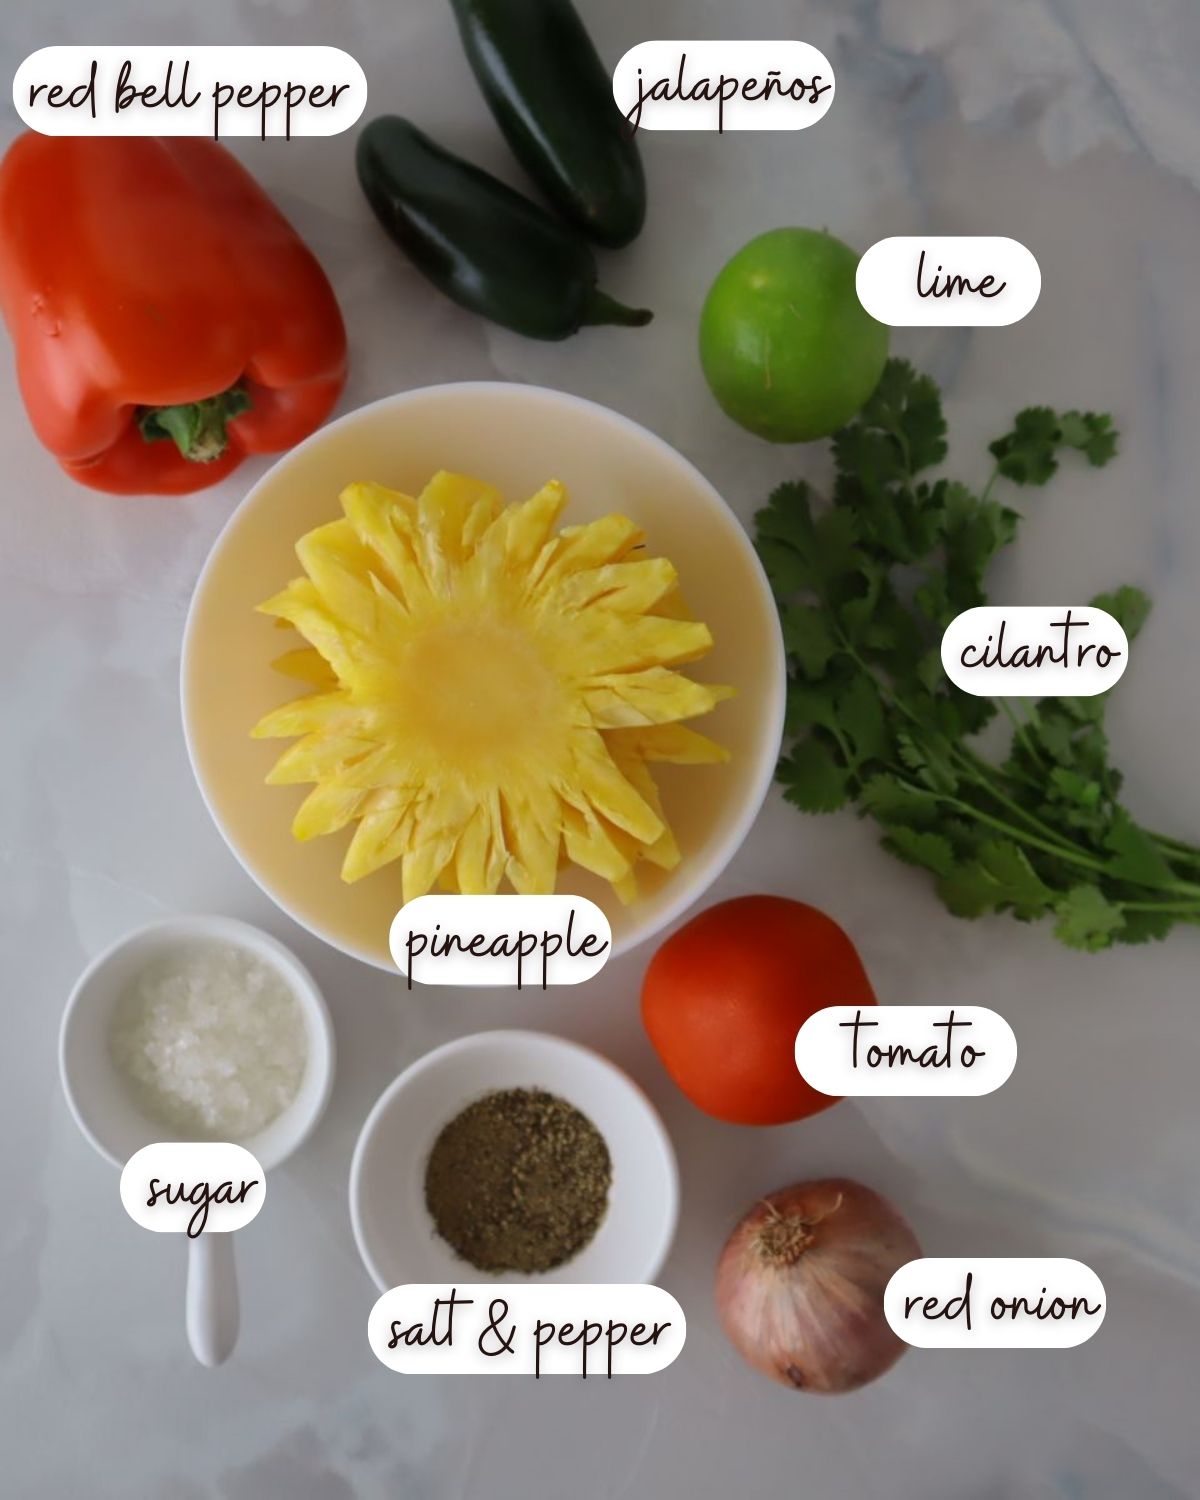 Ingredients of Pineapple Pico de Gallo